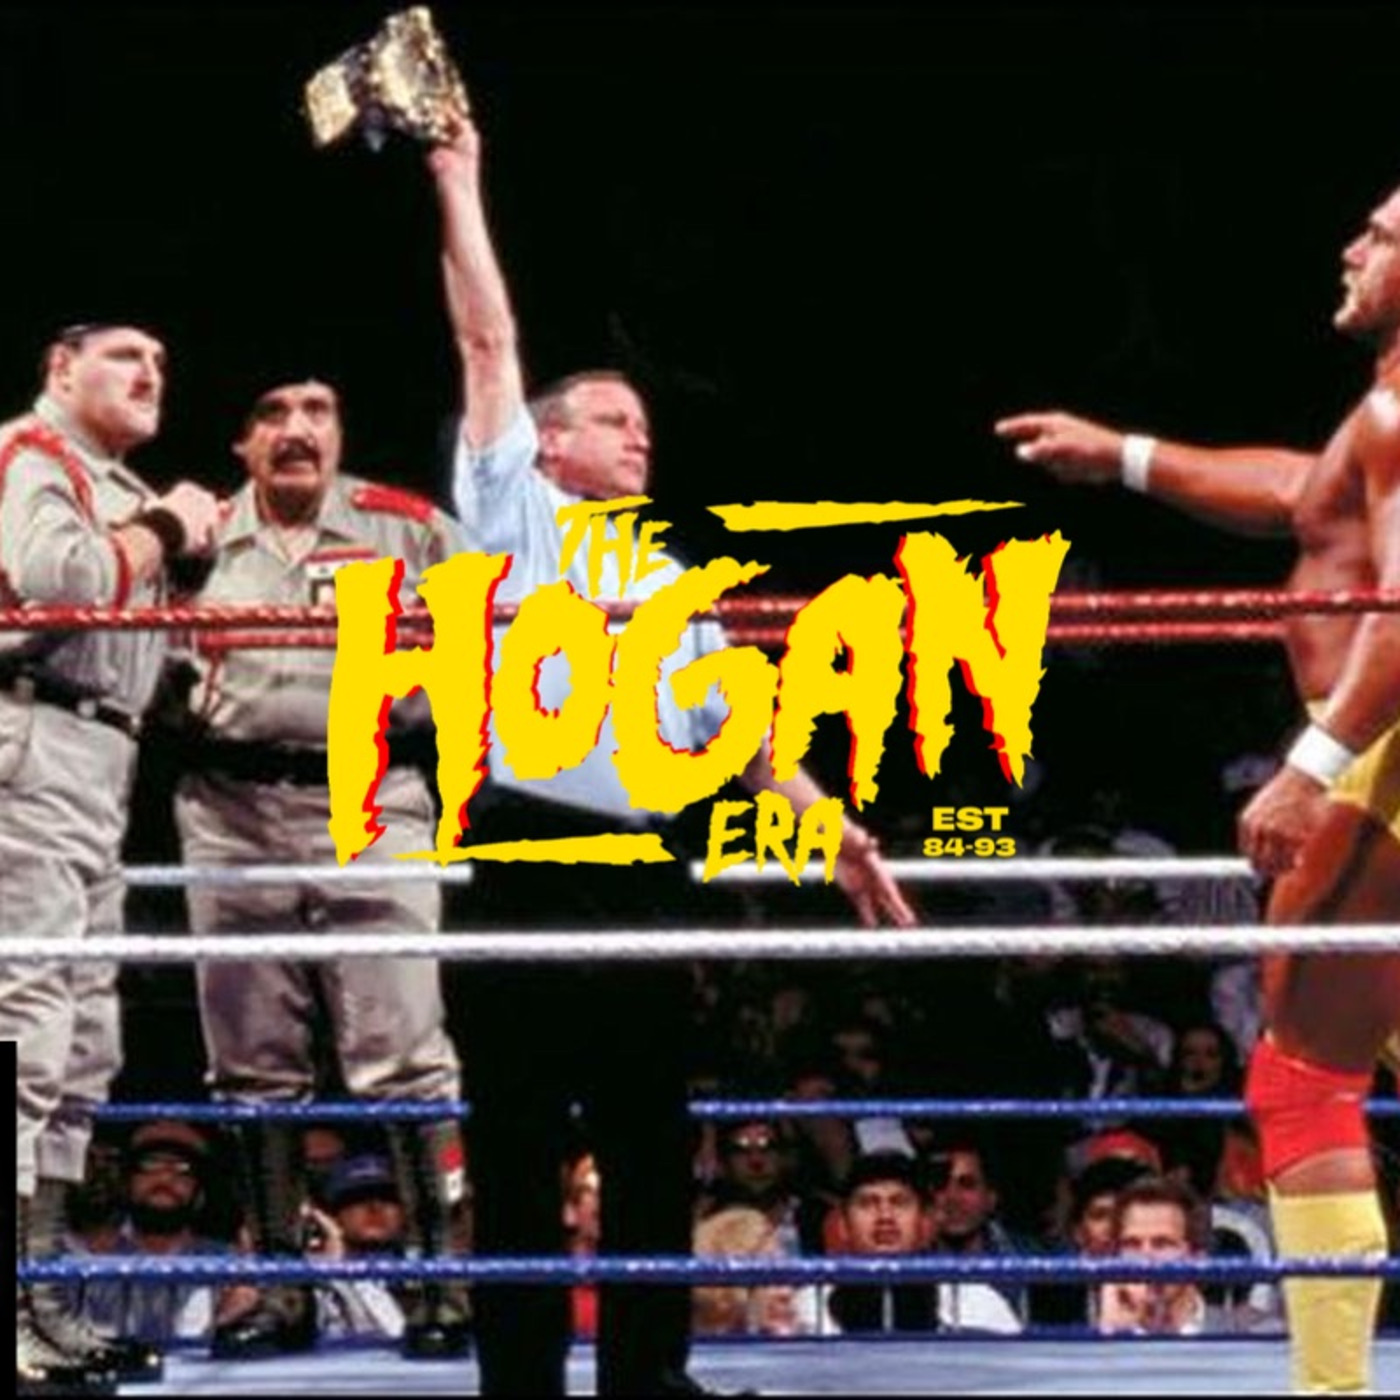 Episode 77: The Hogan Era - General Adnan